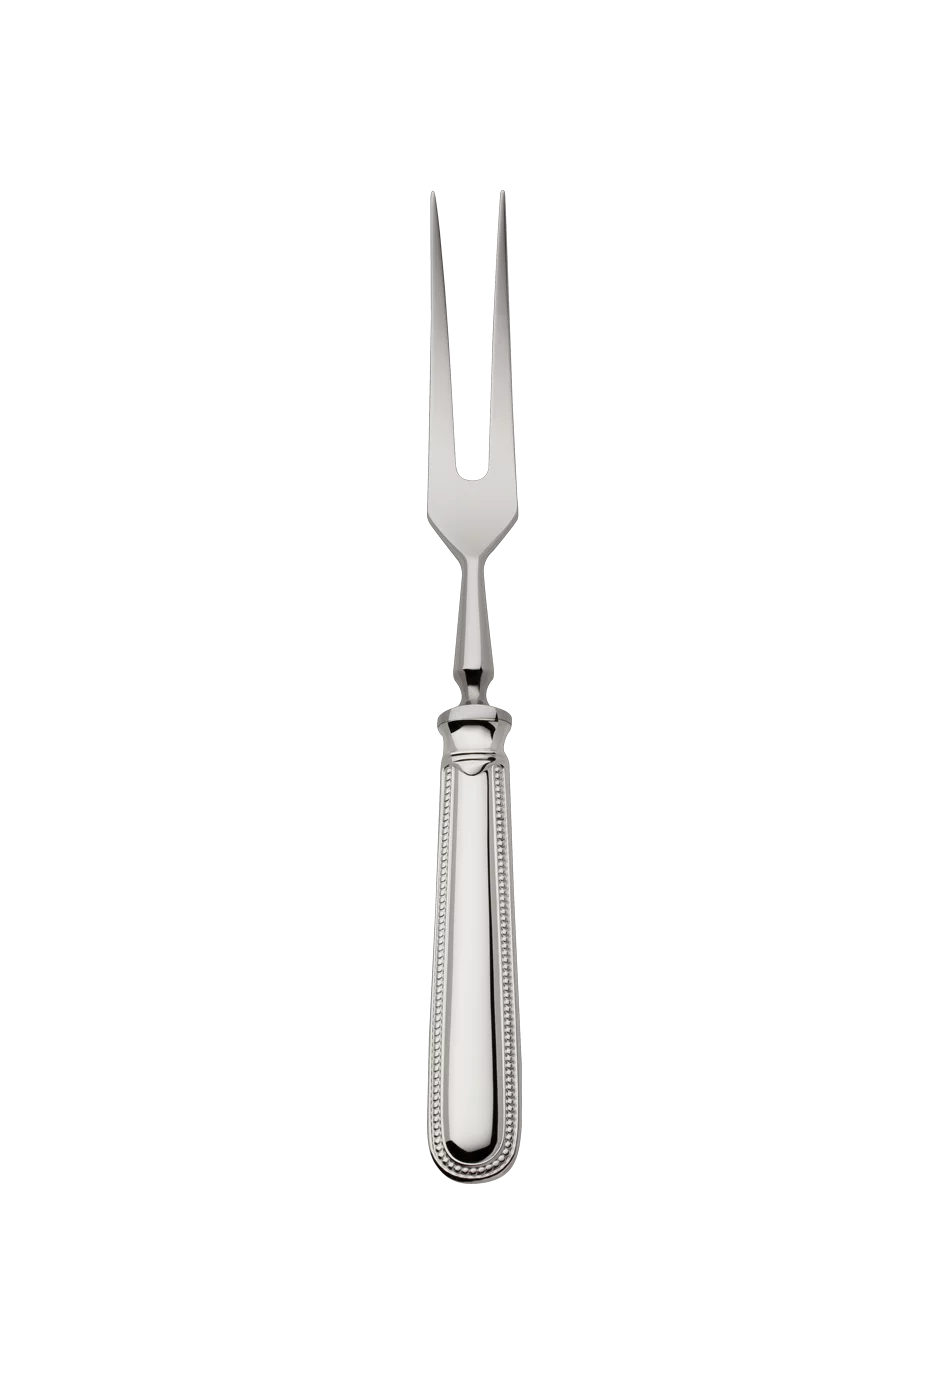 Französisch-Perl Carving Fork (150g massive silverplated)